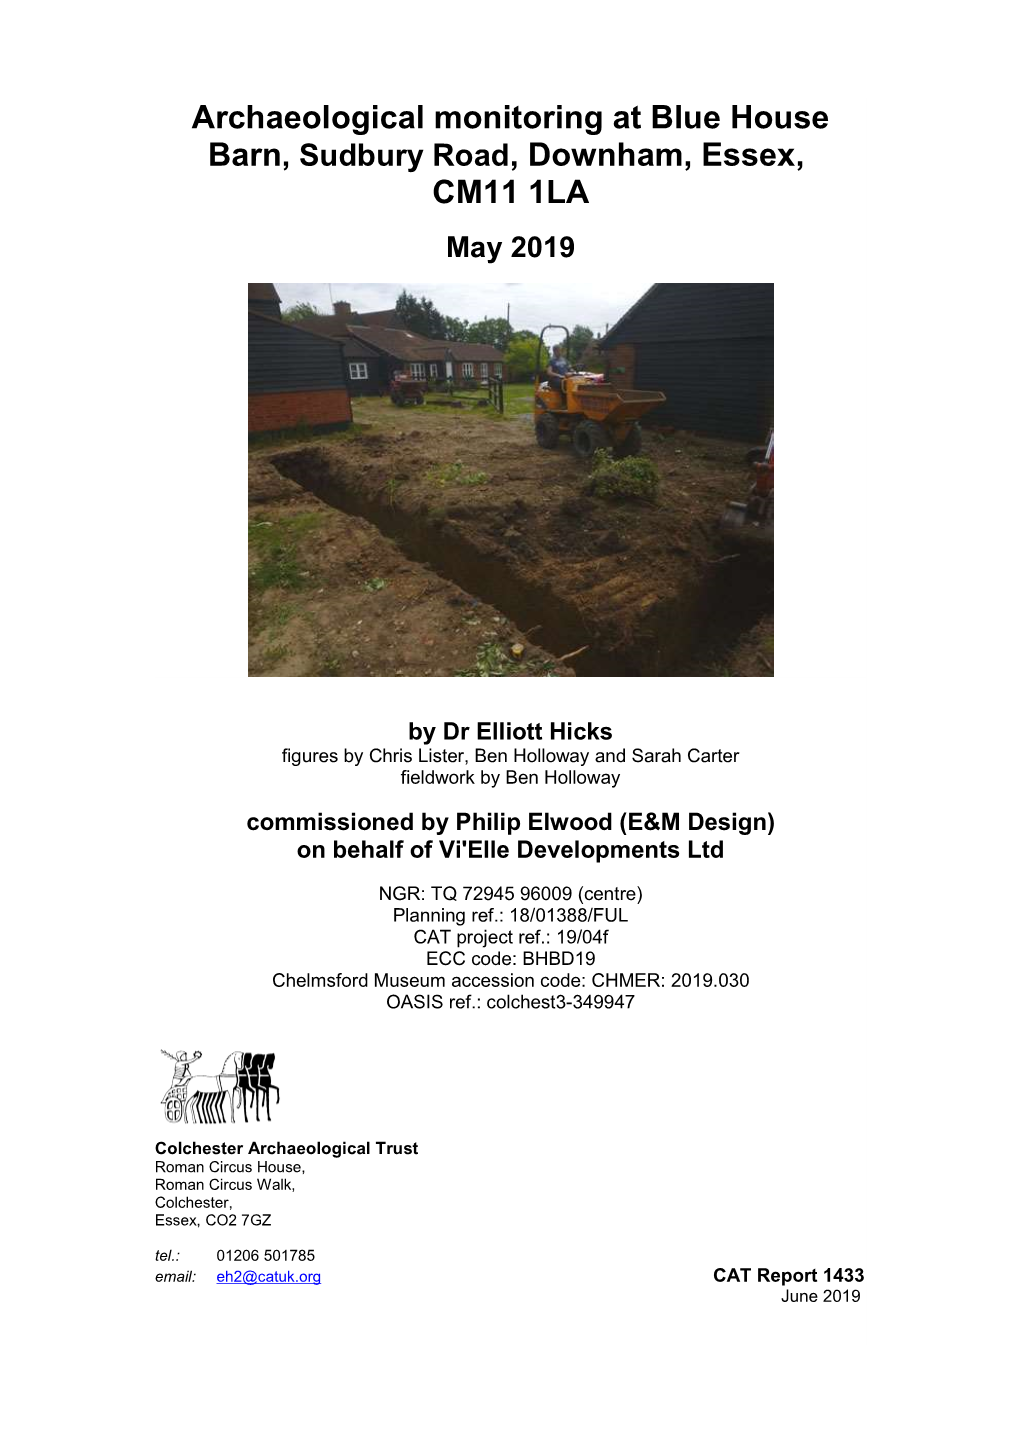 Archaeological Monitoring at Blue House Barn, Sudbury Road, Downham, Essex, CM11 1LA May 2019